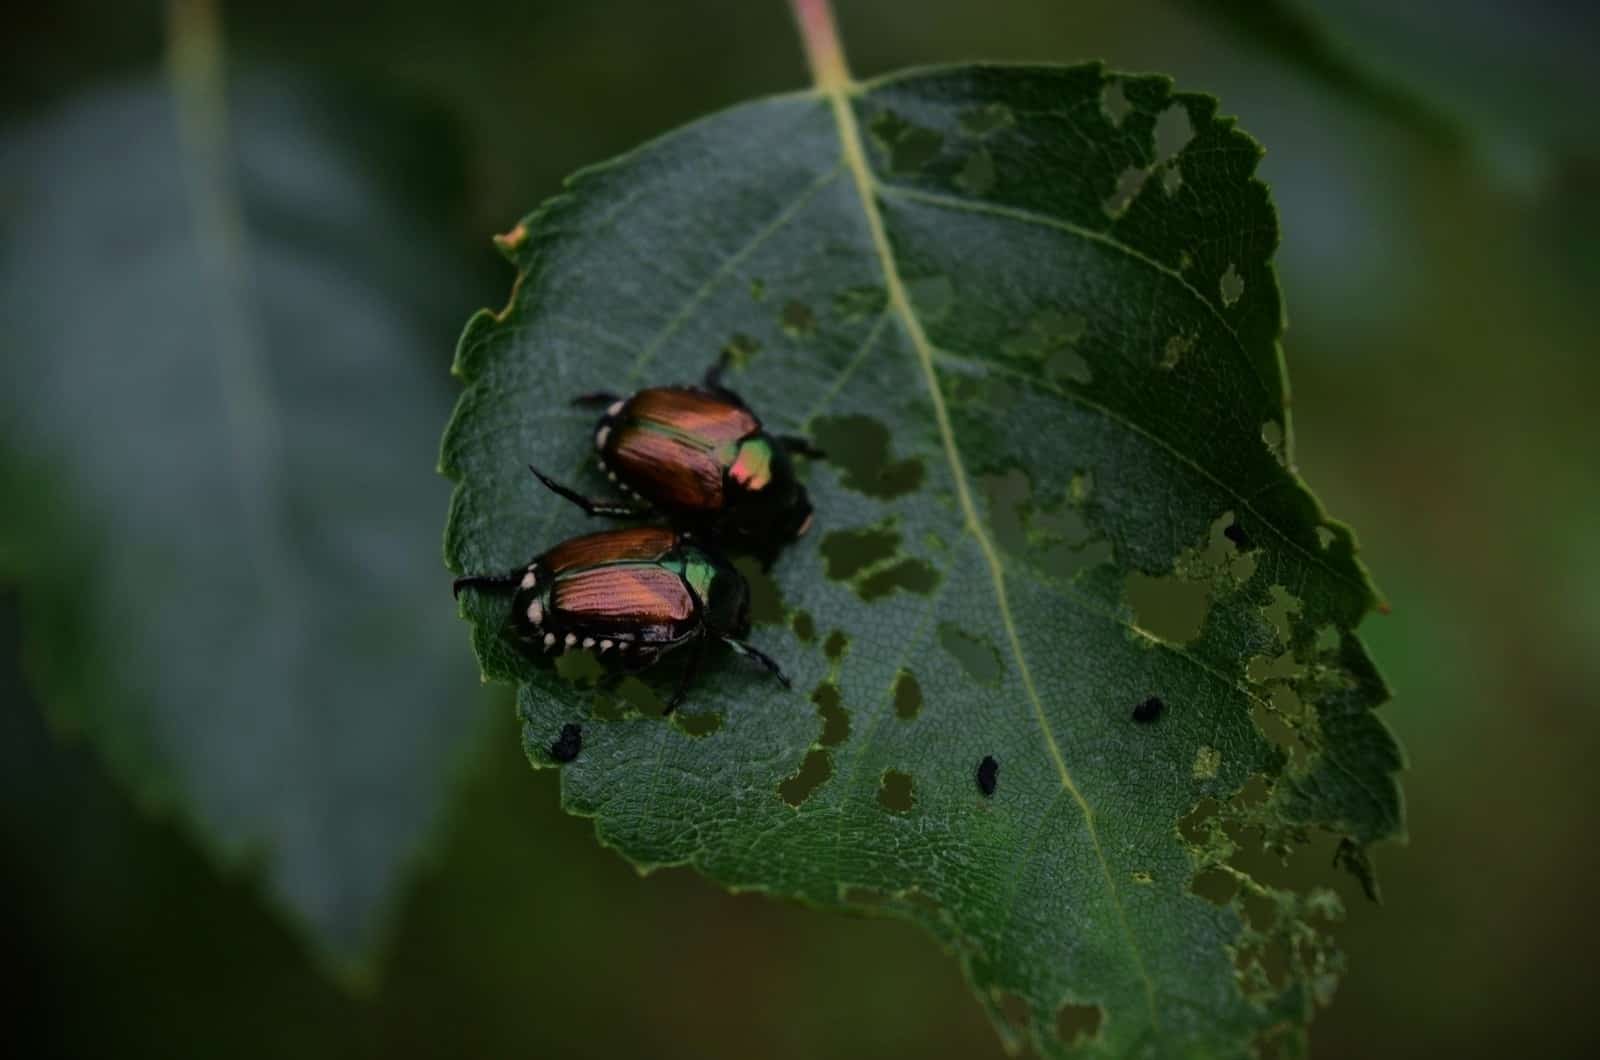 two Japanese Beetles